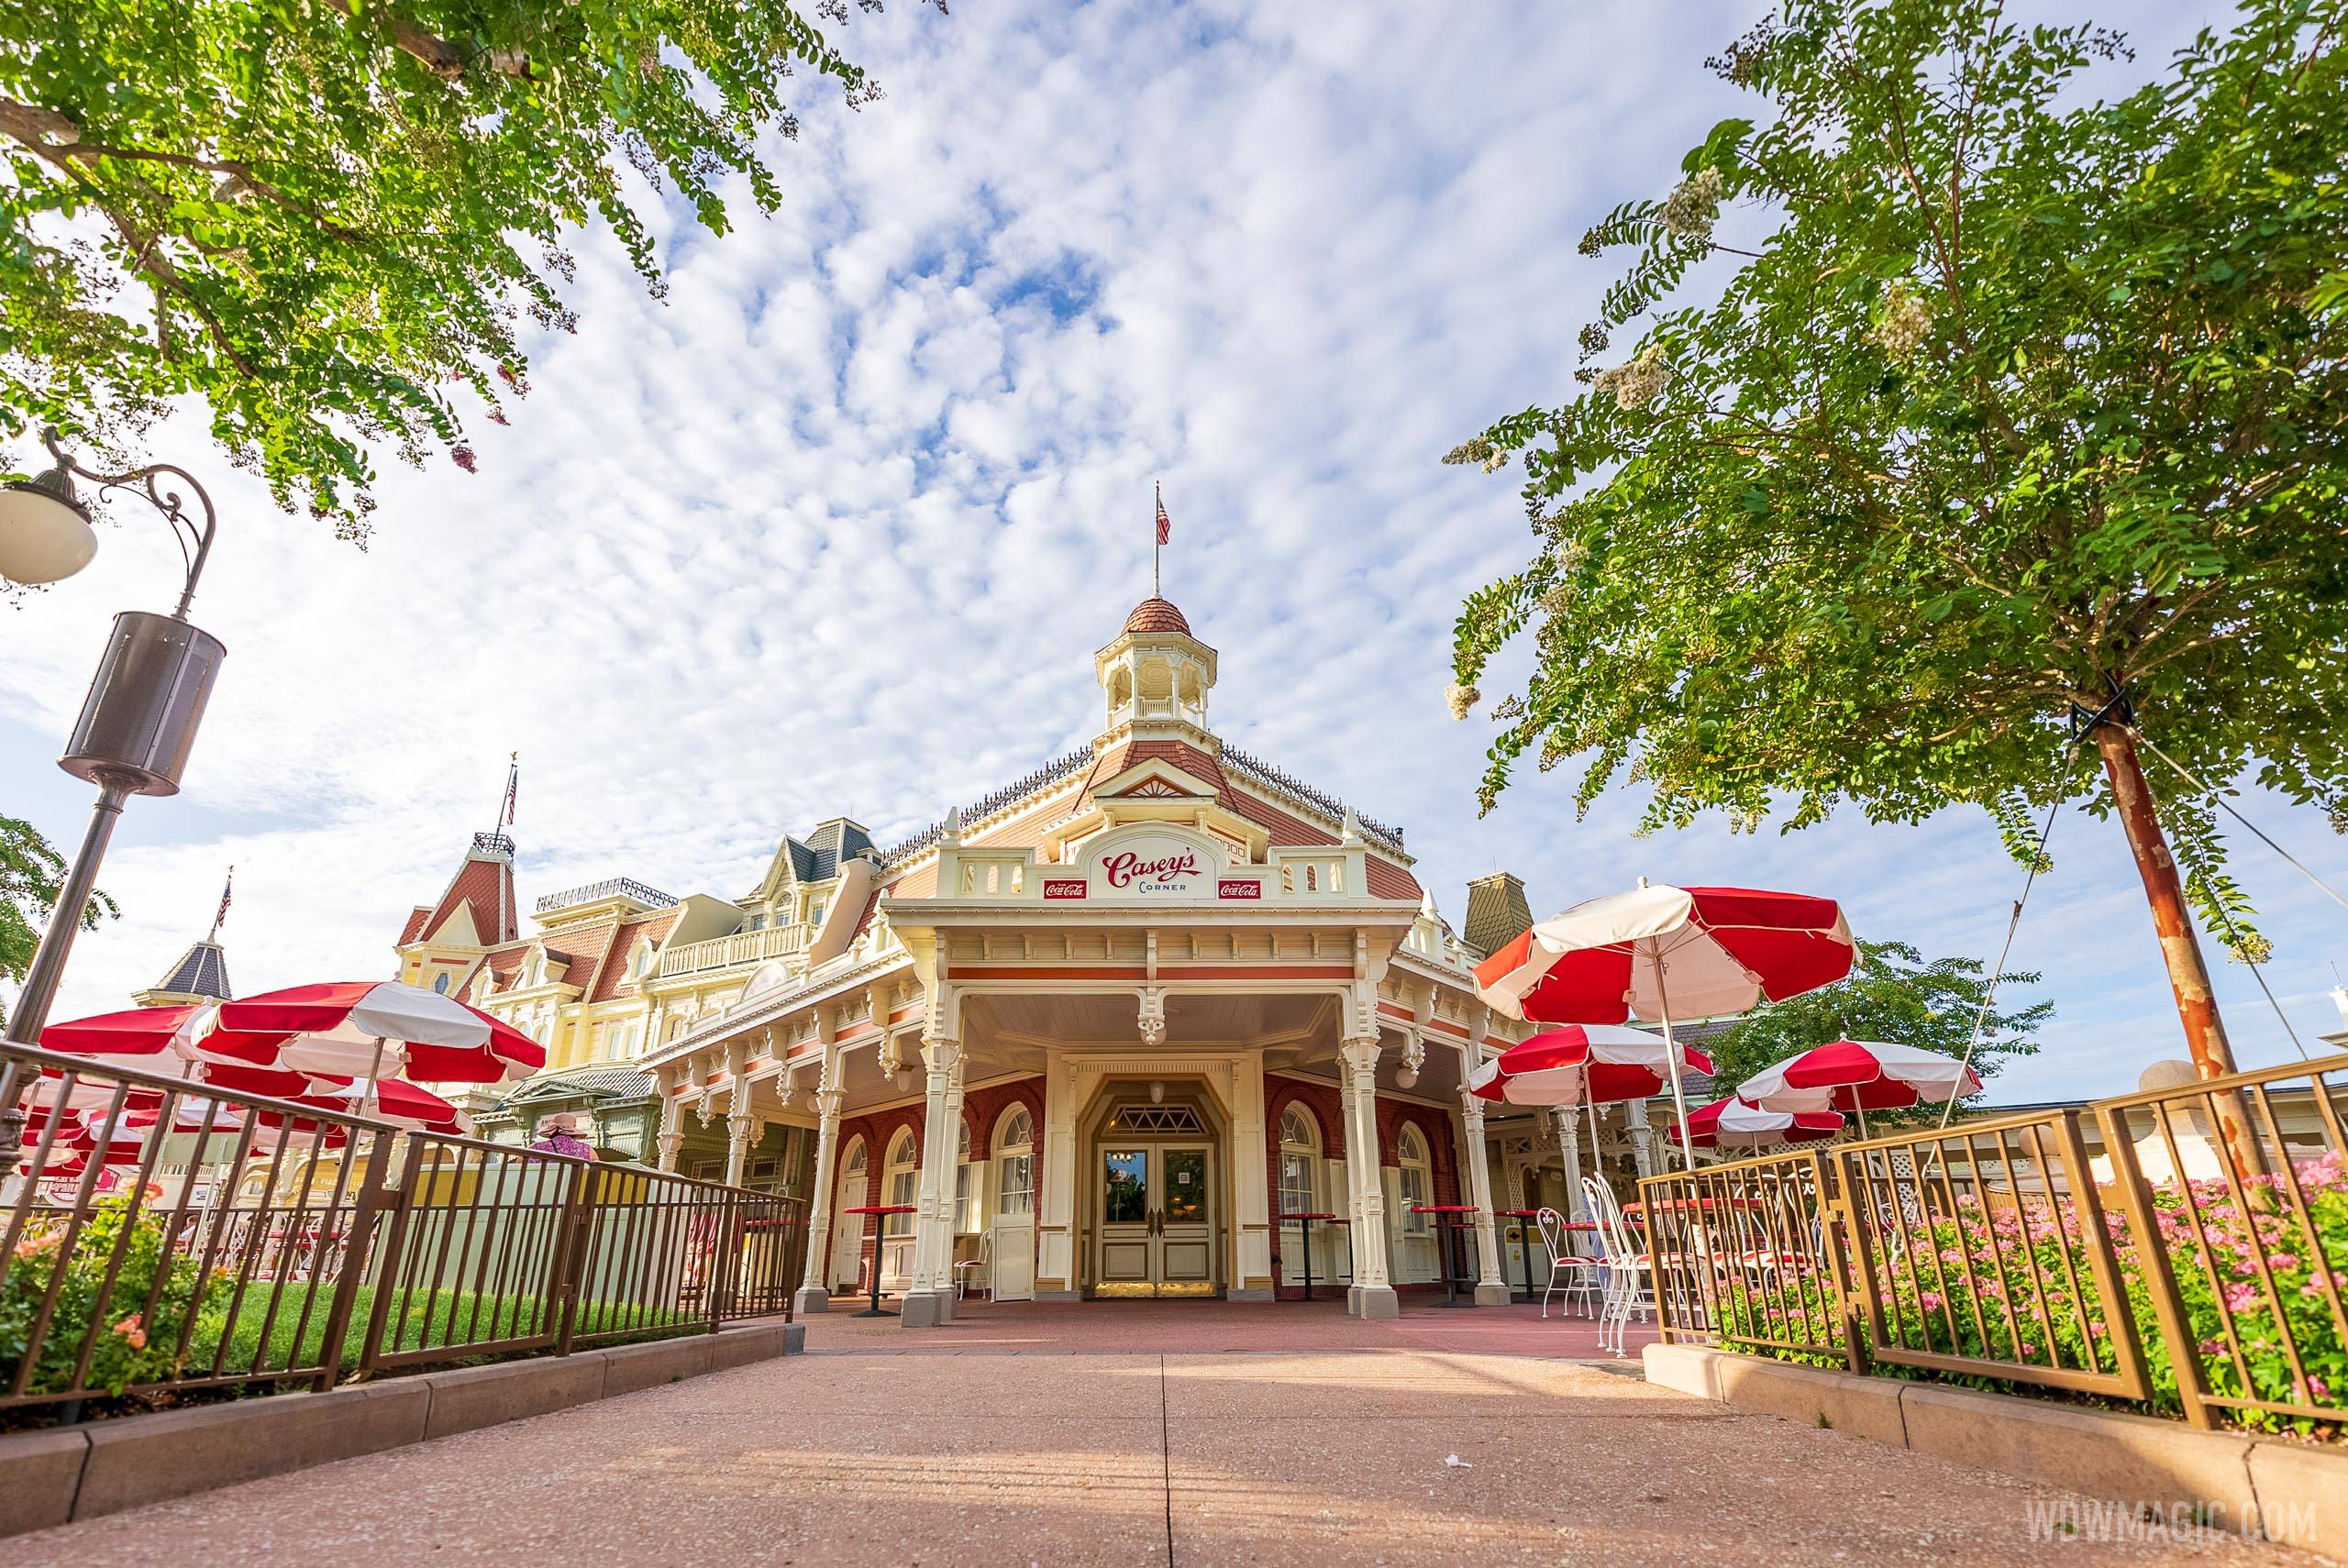 Casey's Corner reopens at Walt Disney World's Magic Kingdom